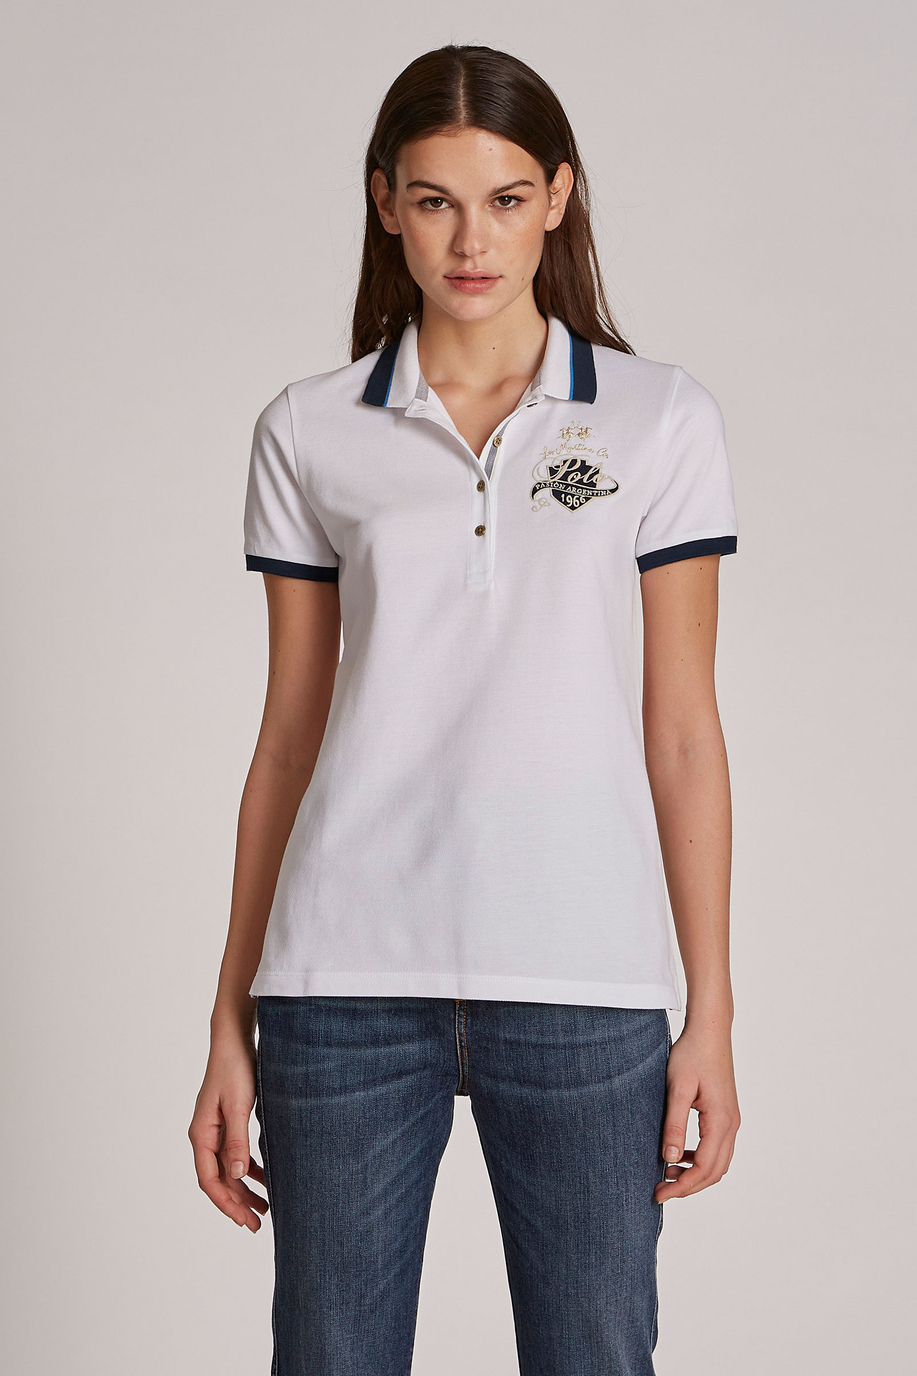 Damen-Poloshirt mit kurzem Arm aus 100 % Baumwolle im Regular Fit | La Martina - Official Online Shop